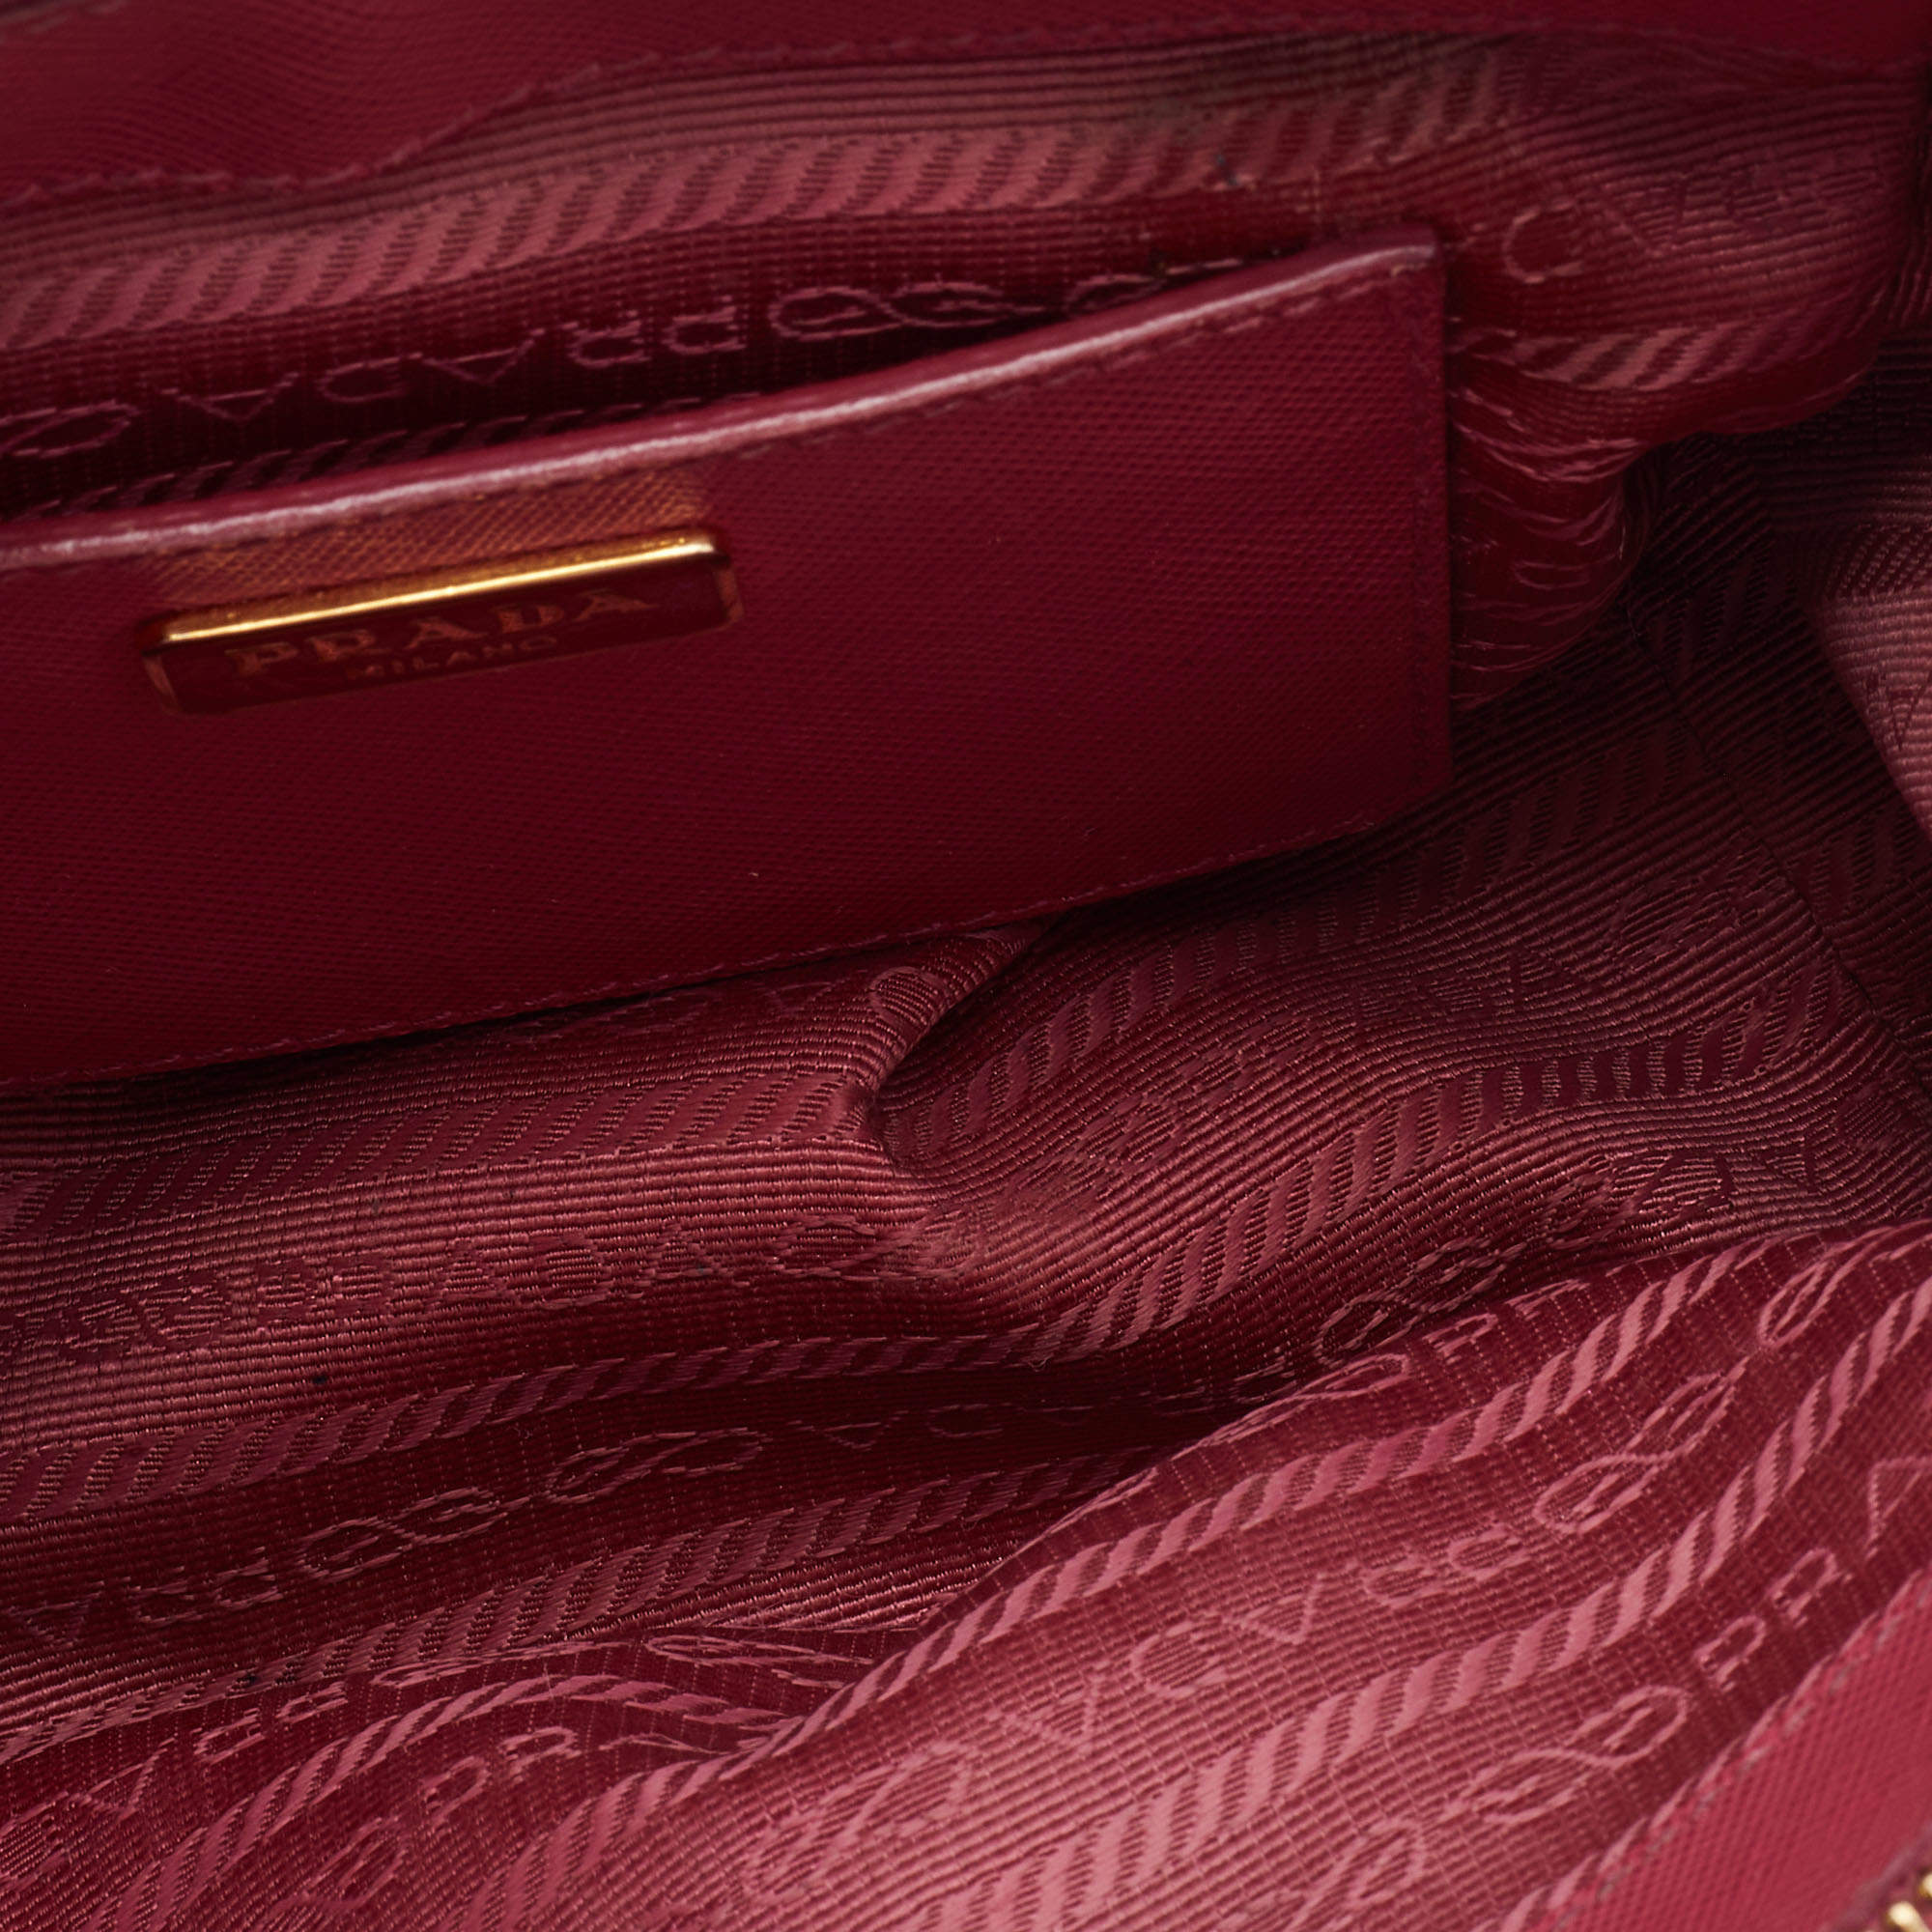 Galleria Saffiano Leather Micro-Bag in Petal Pink – COSETTE